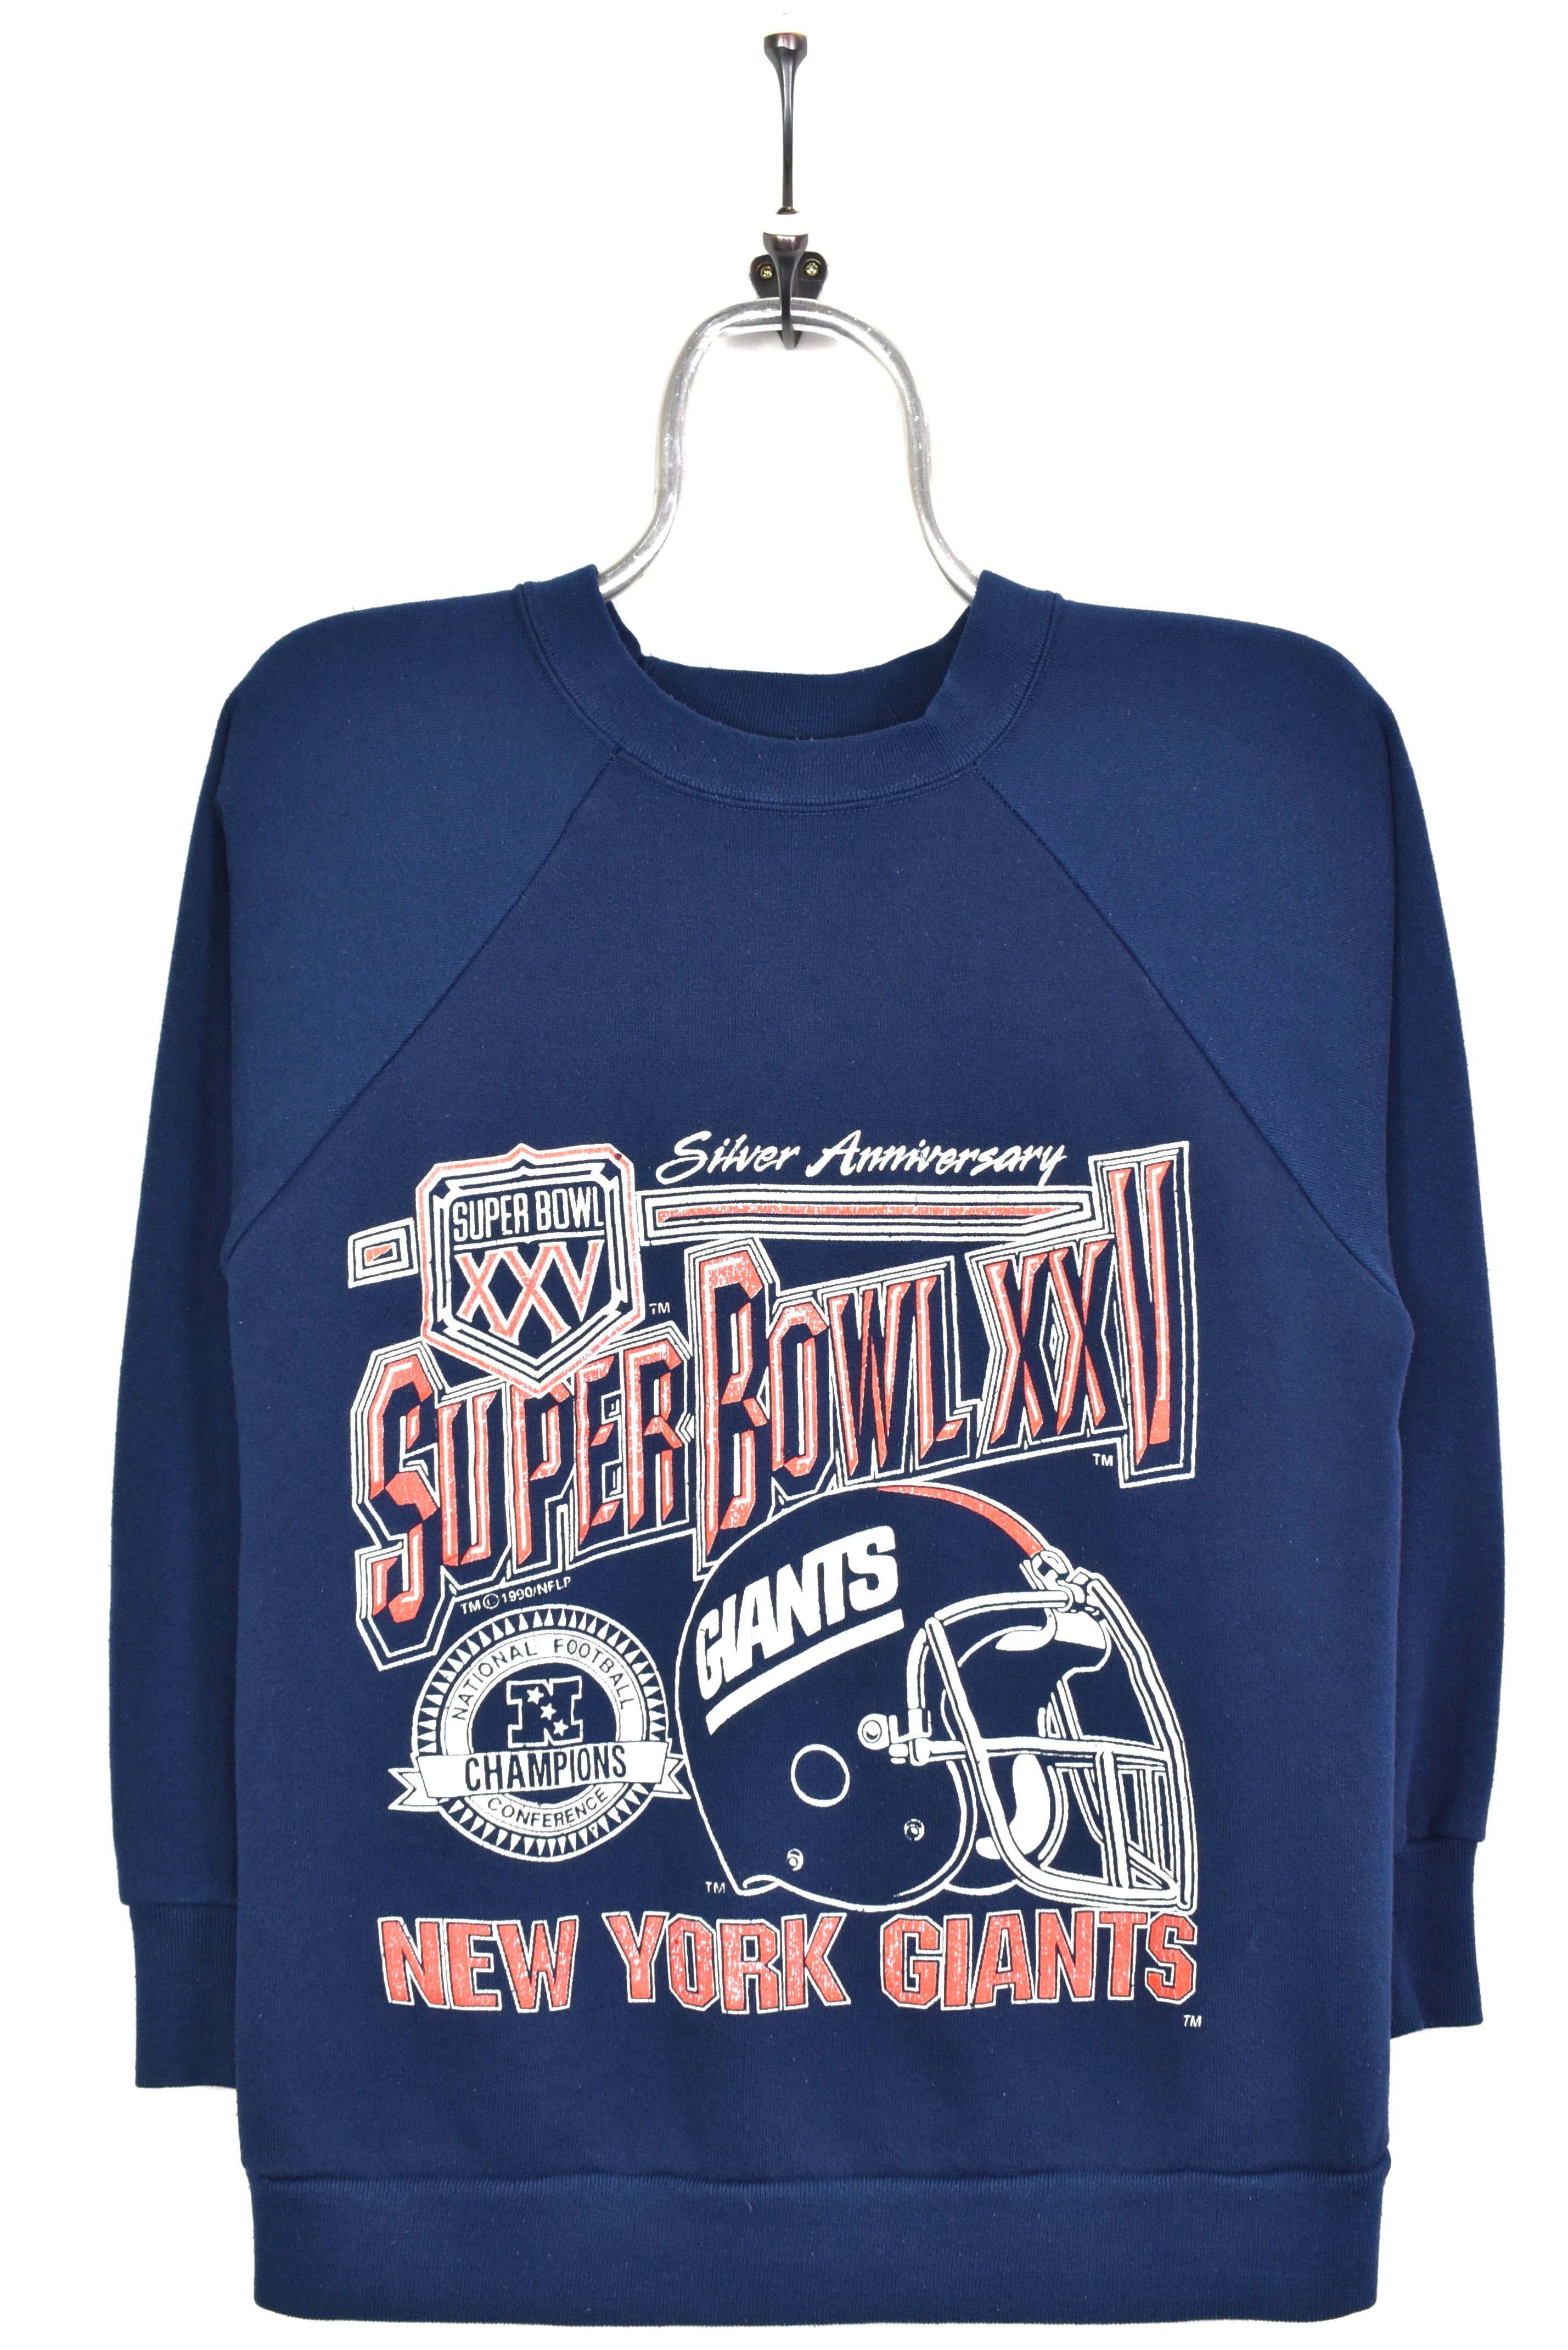 Vintage New York Giants NFL Football T Shirt T-shirt Super 